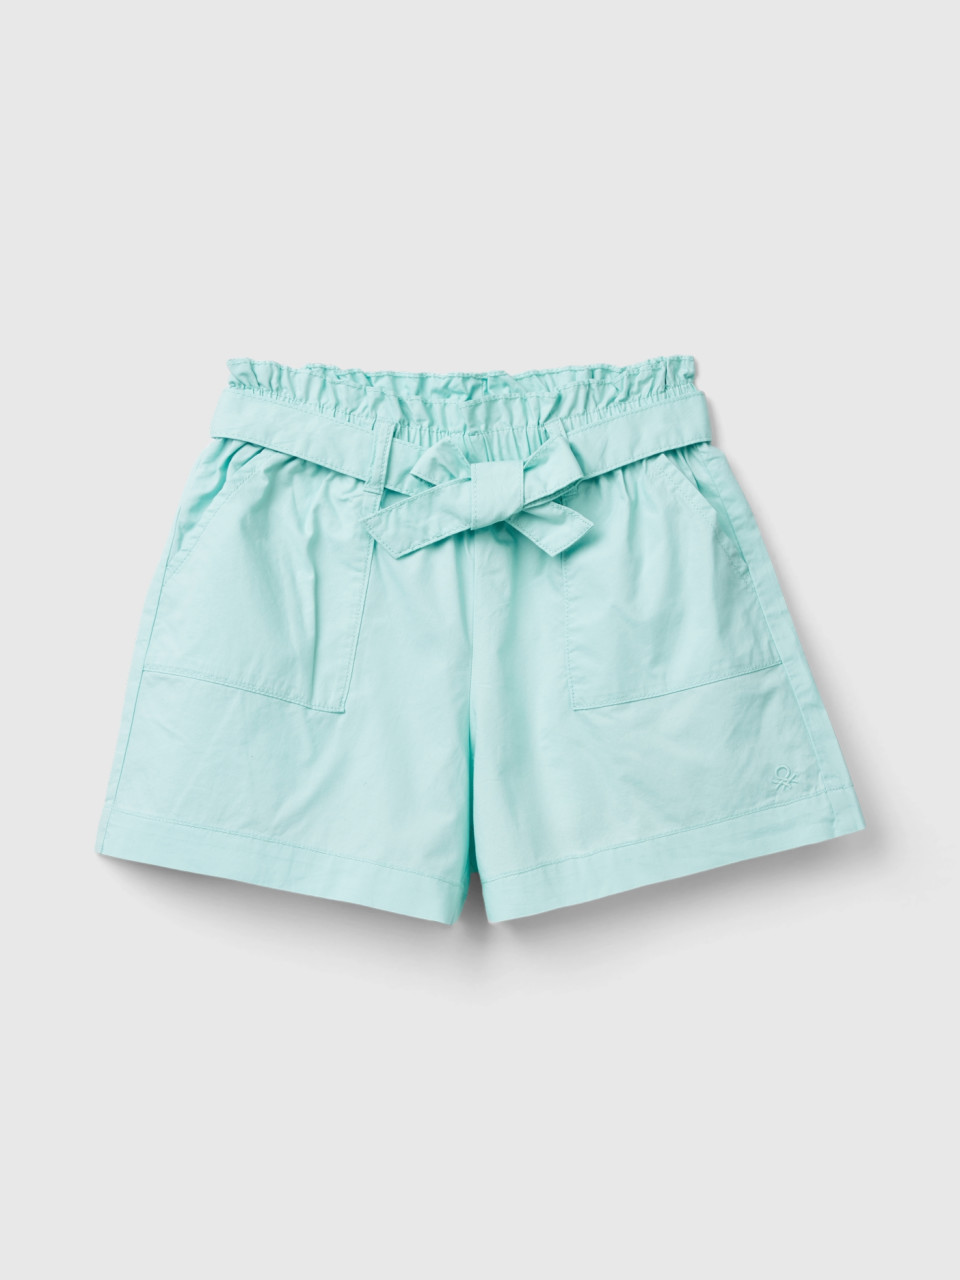 Benetton, Paperbag Shorts, Aqua, Kids